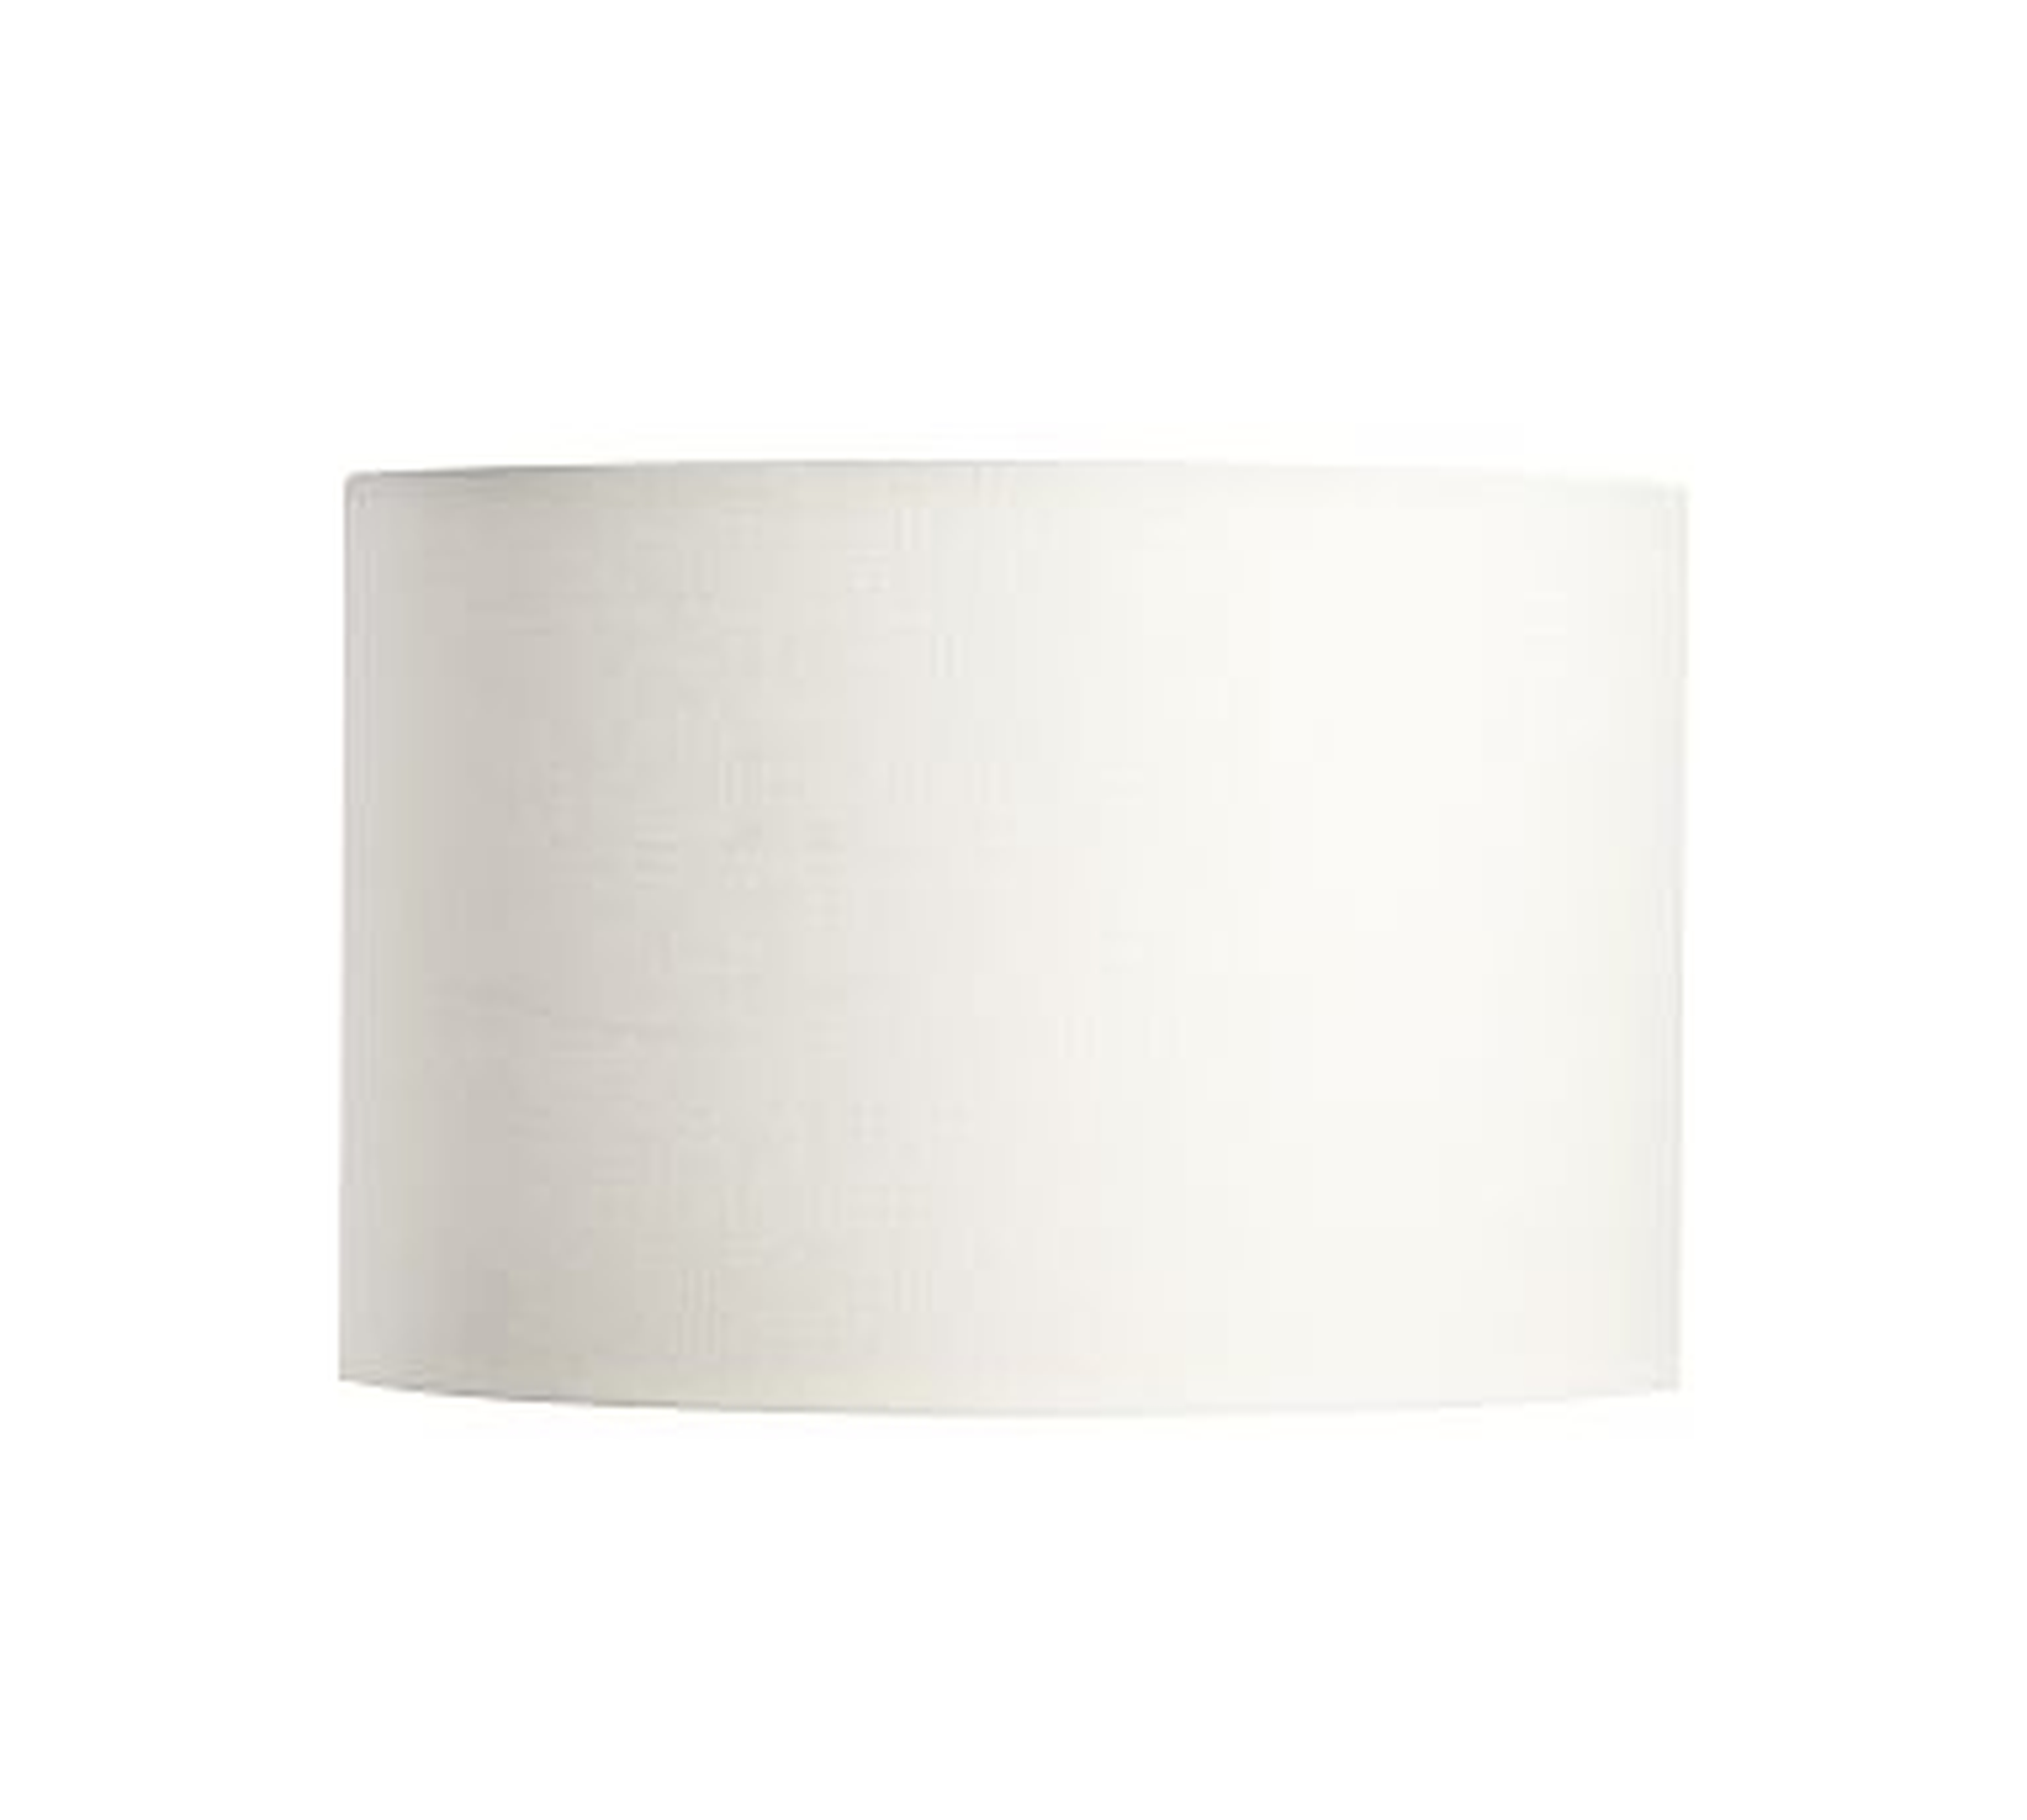 Gallery Straight-Sided Linen Drum Lamp Shade, Medium, White - Pottery Barn